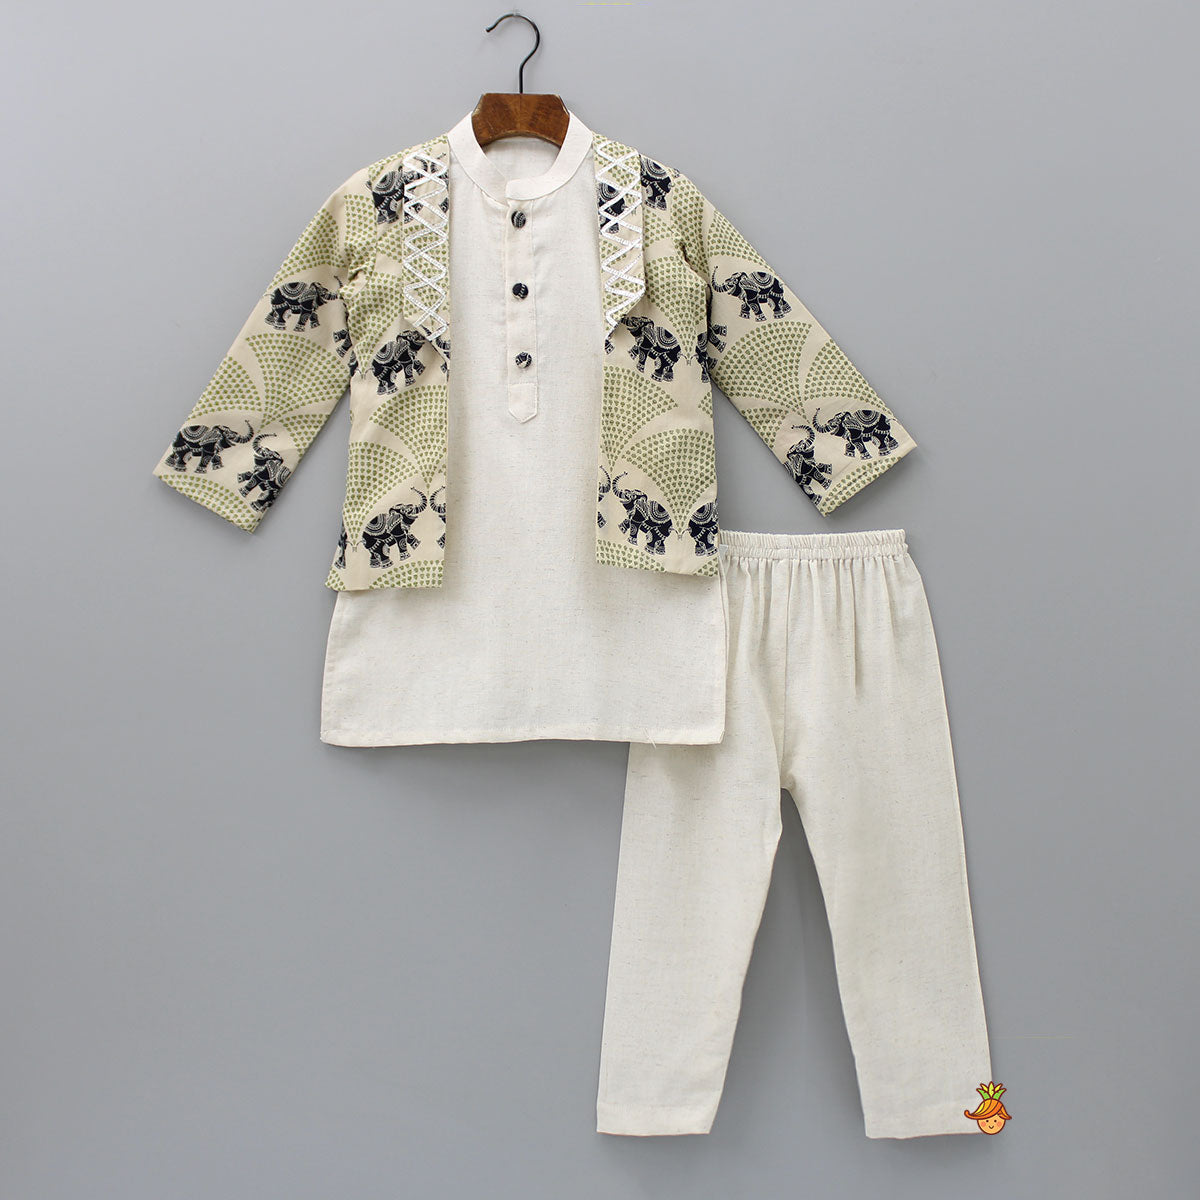 Buy Off White Art Silk Boys Kurta Pajama with Long Jacket (NKK-803) Online